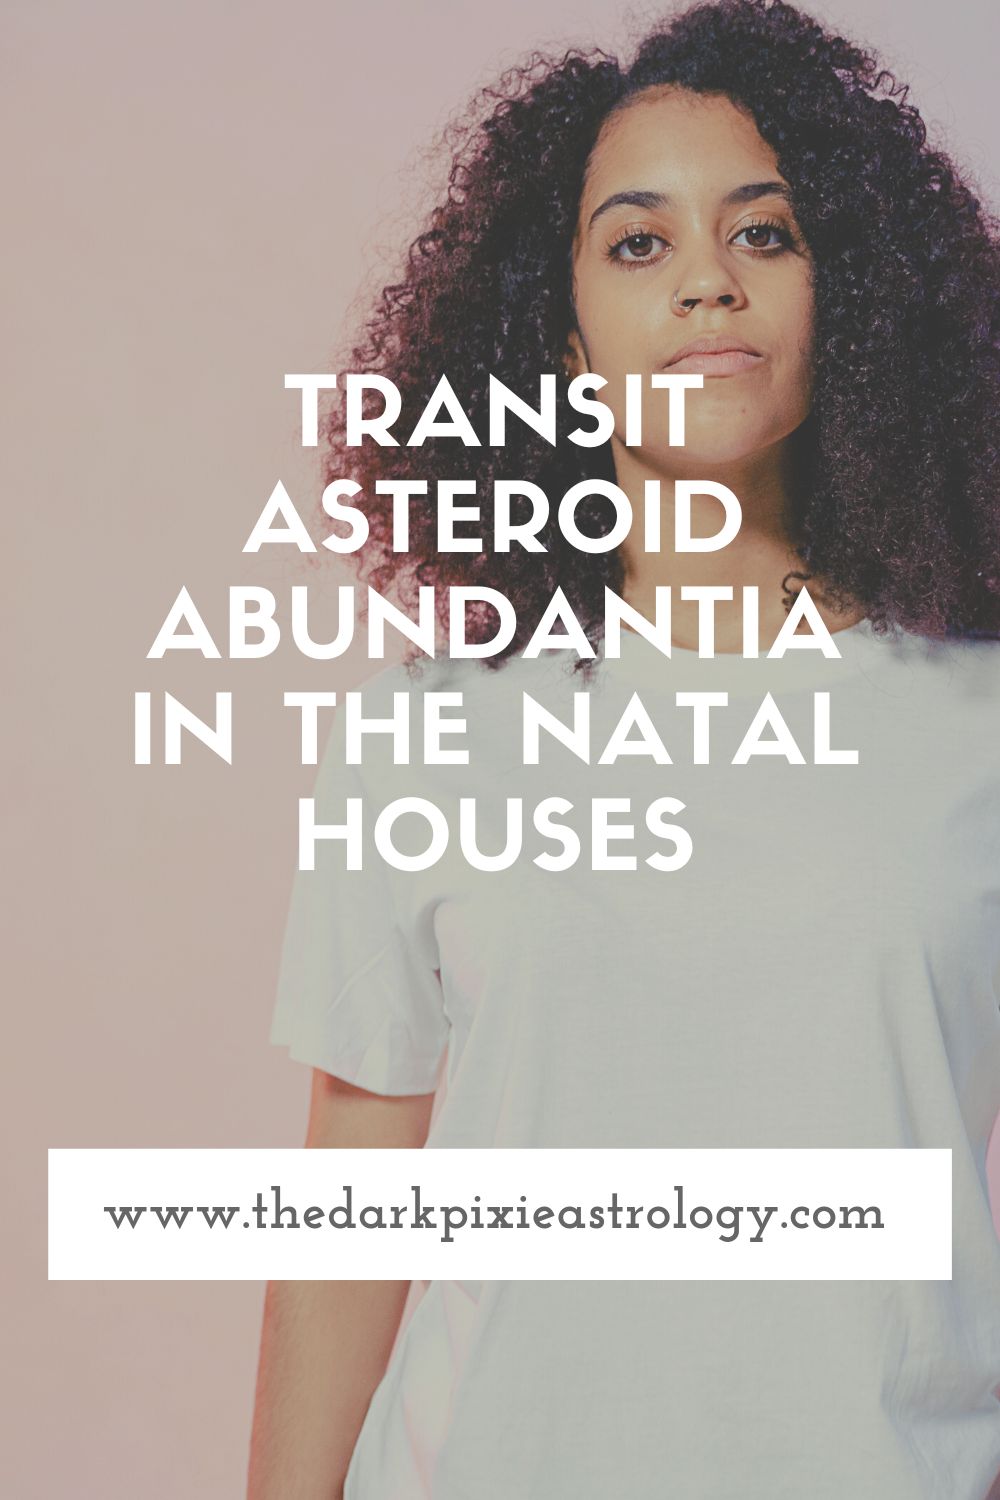 Transit Asteroid Abundantia in the Natal Houses - The Dark Pixie Astrology